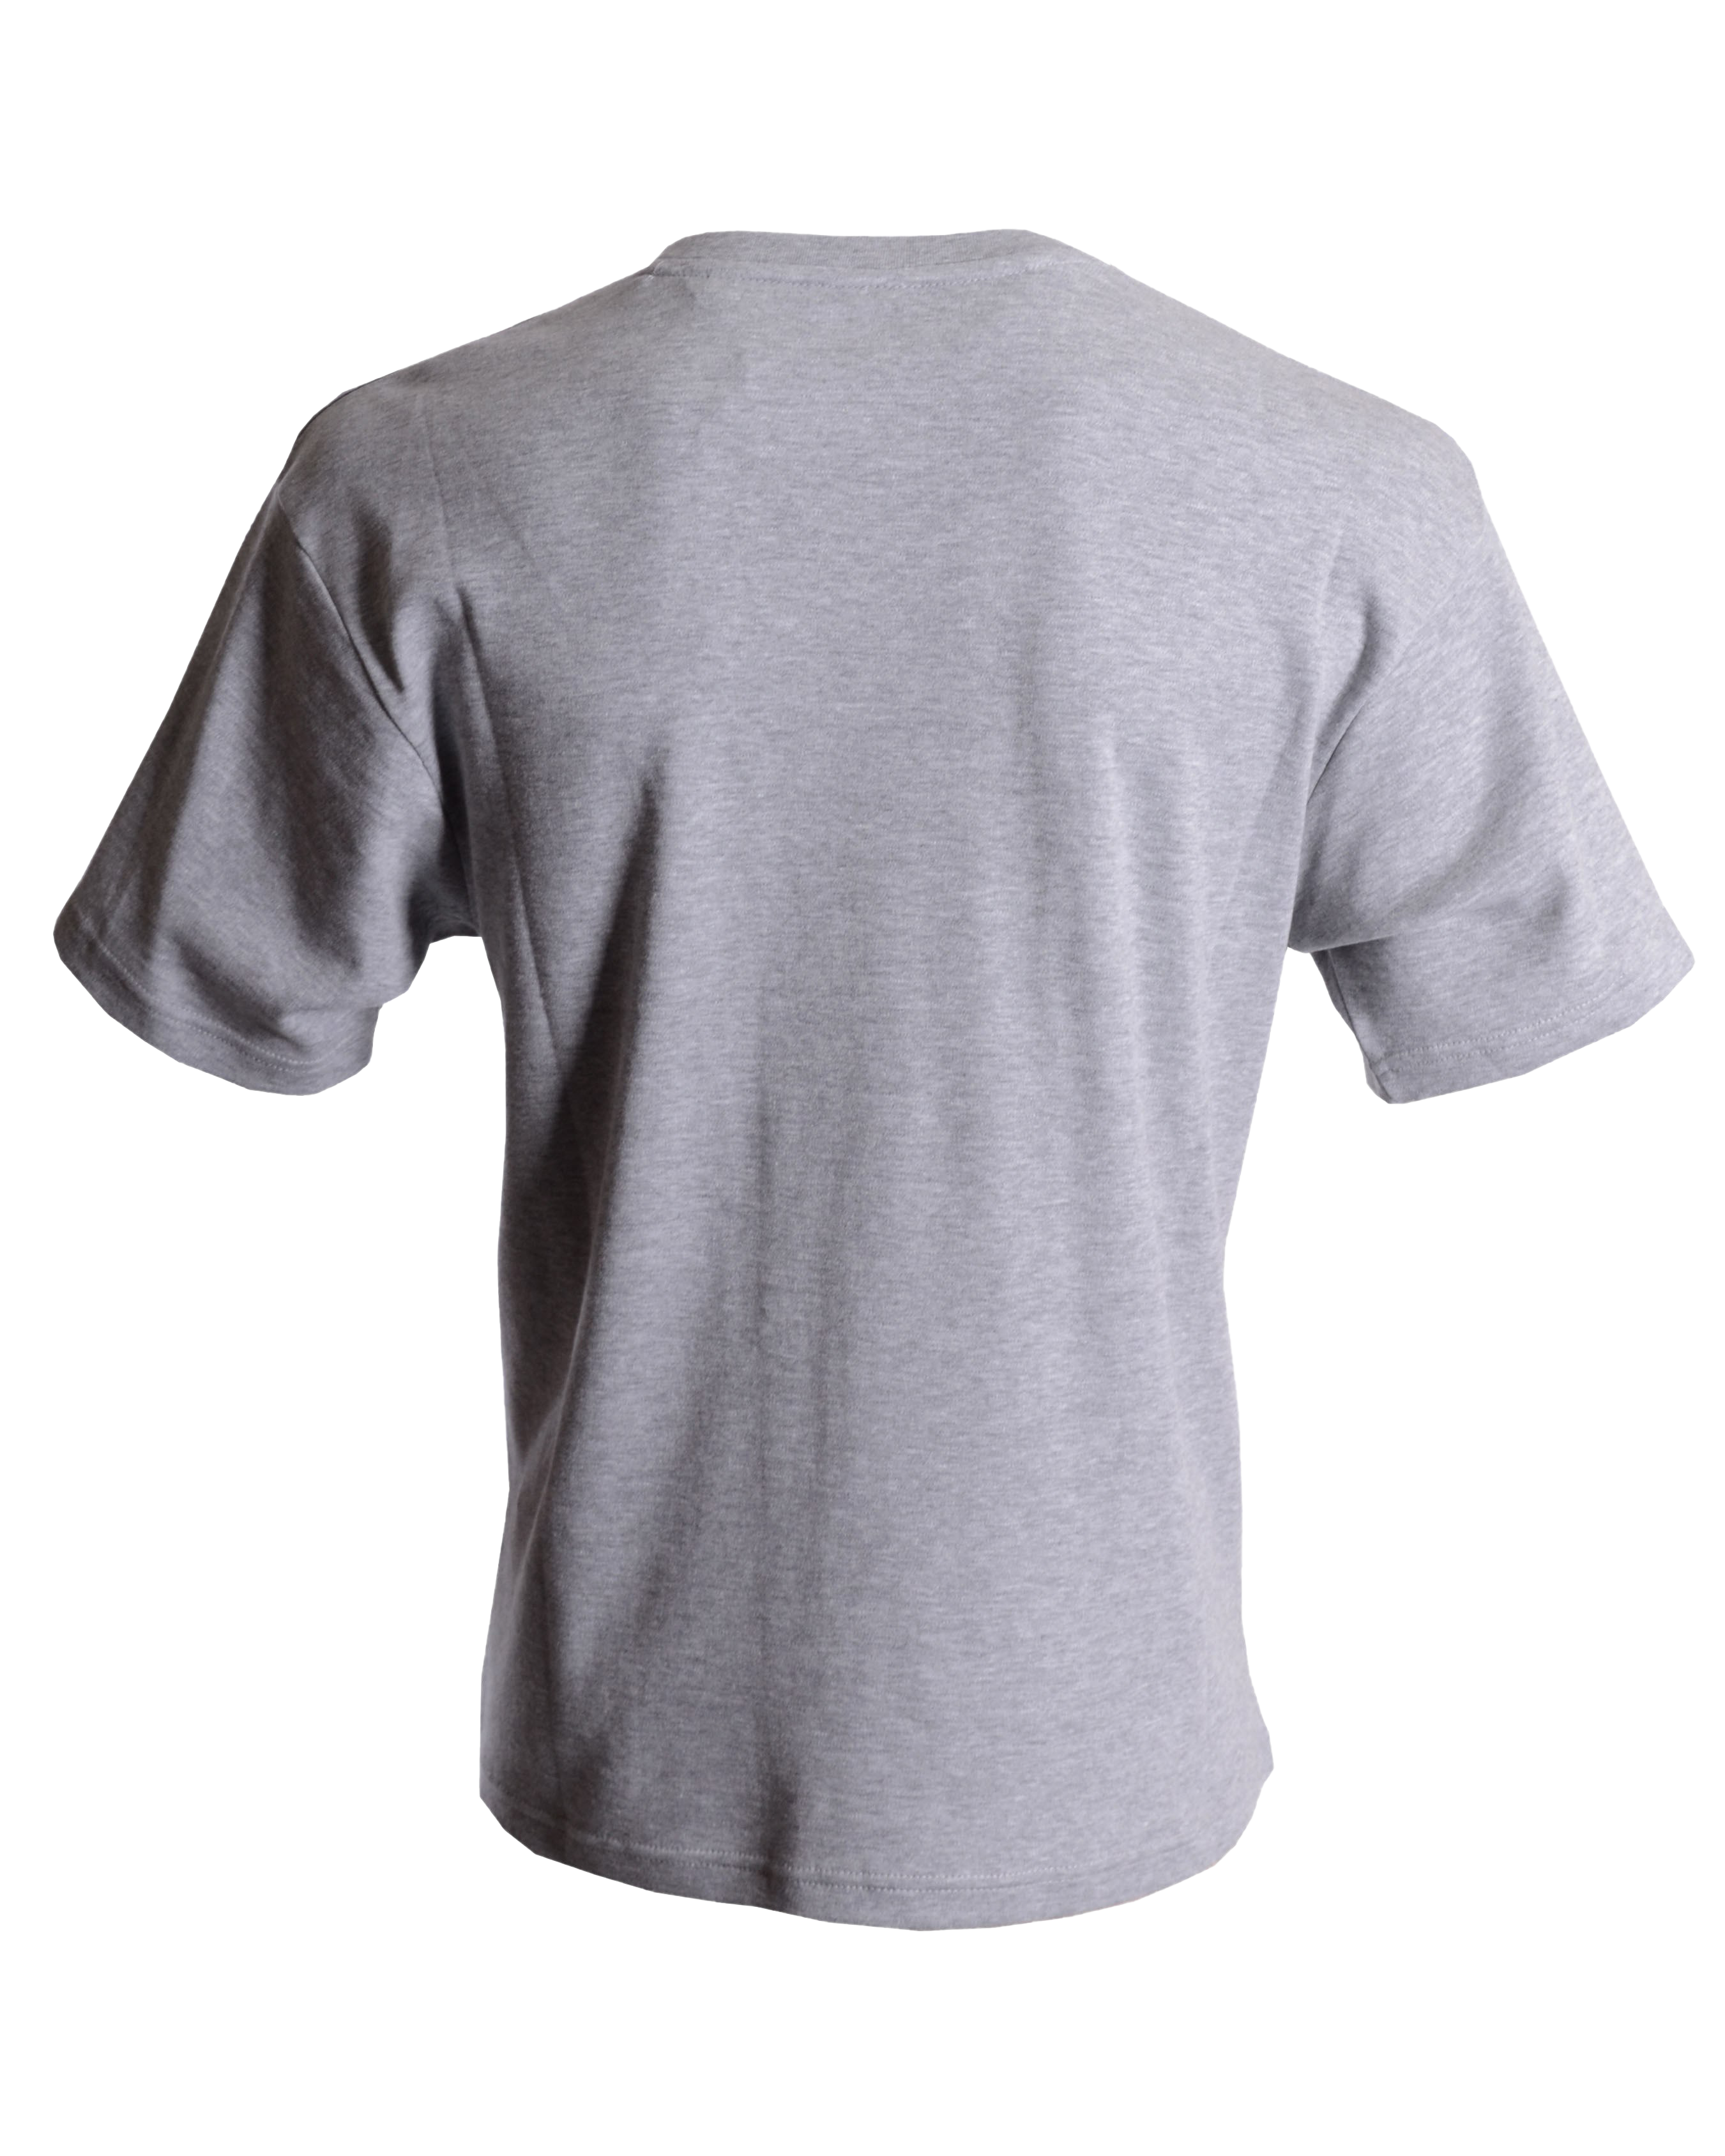 Camiseta gris llanura PNG photo